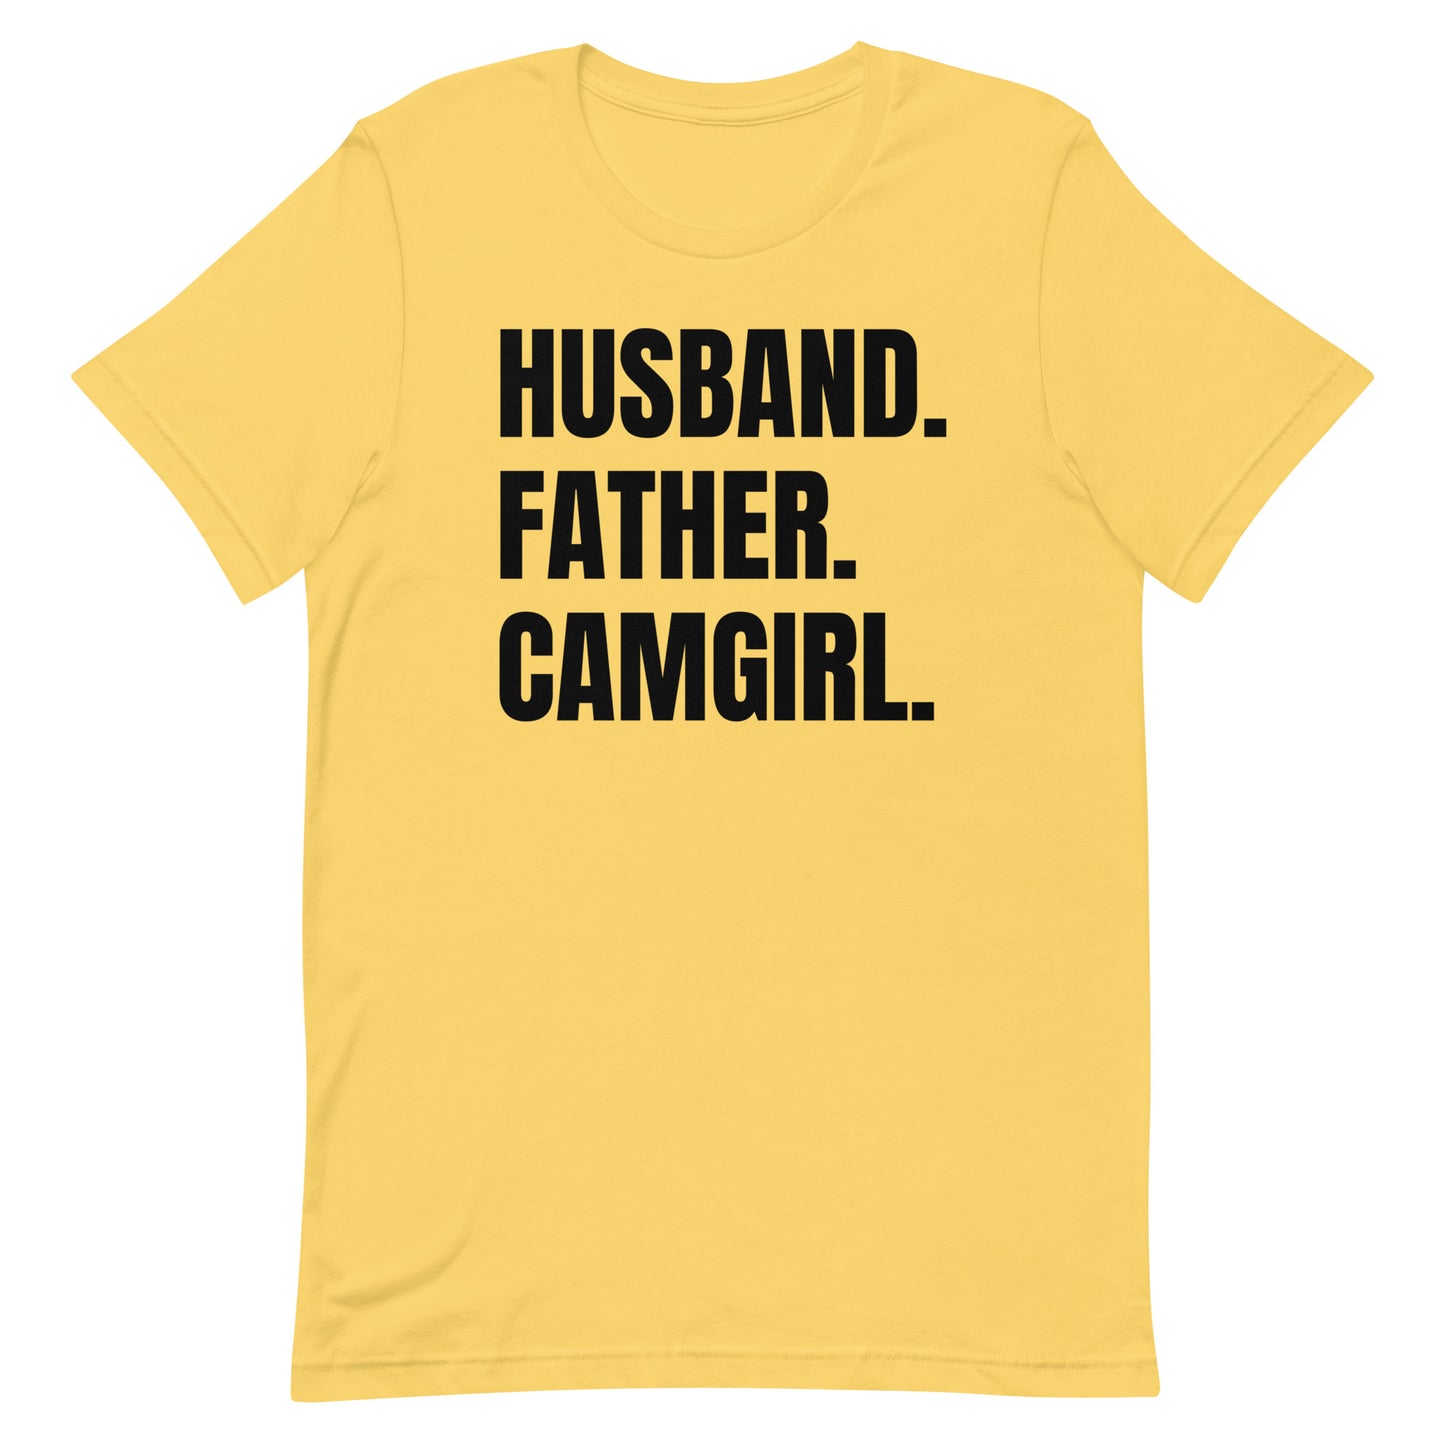 Husband. Father. Camgirl. Unisex t-shirt